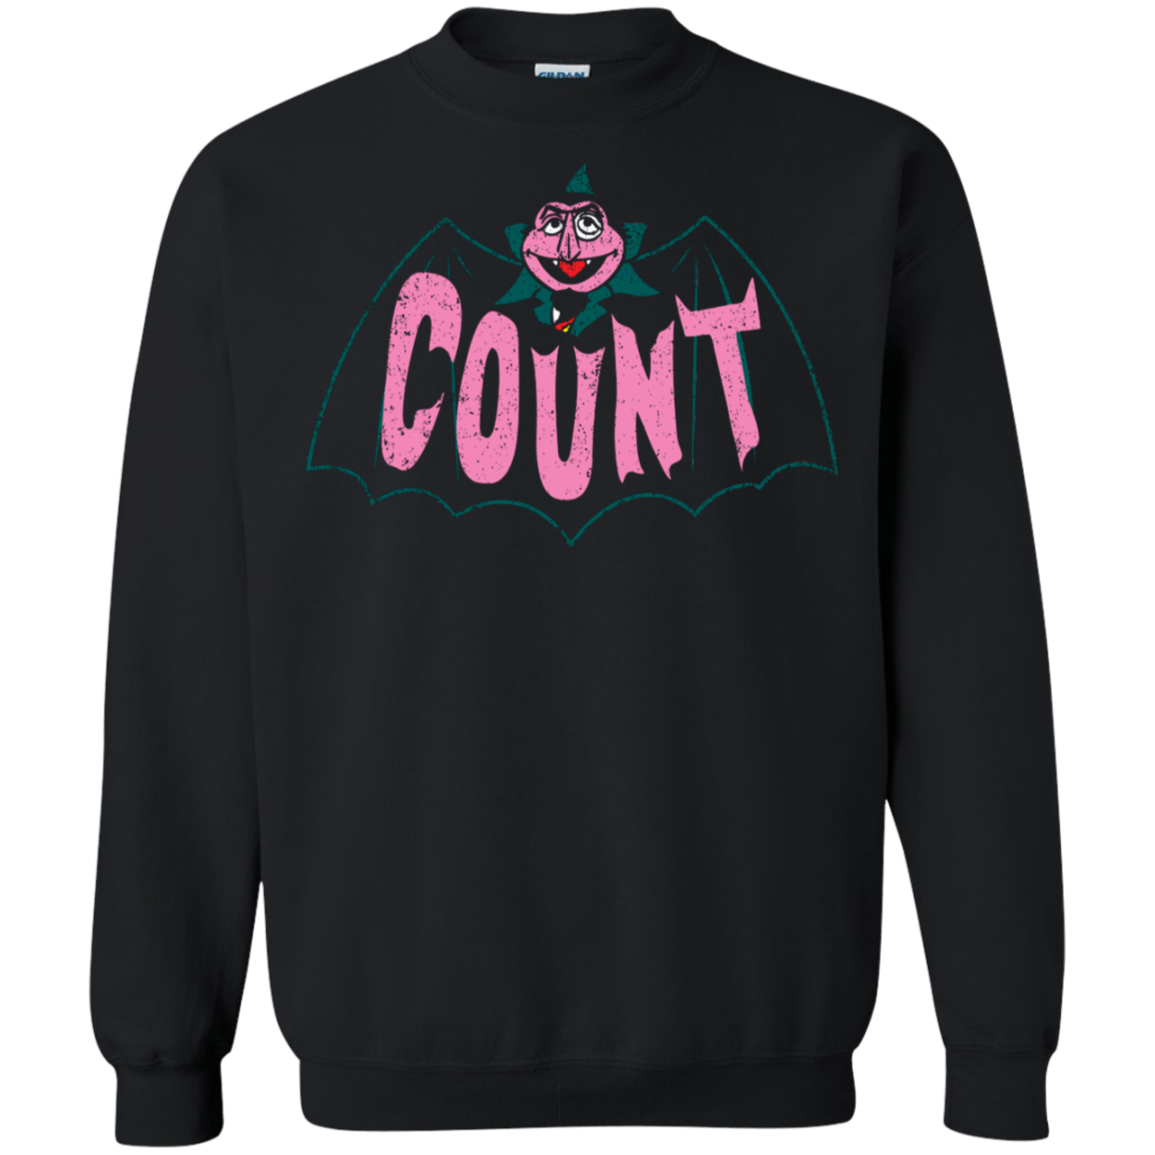 Sweatshirts Black / S Count Crewneck Sweatshirt